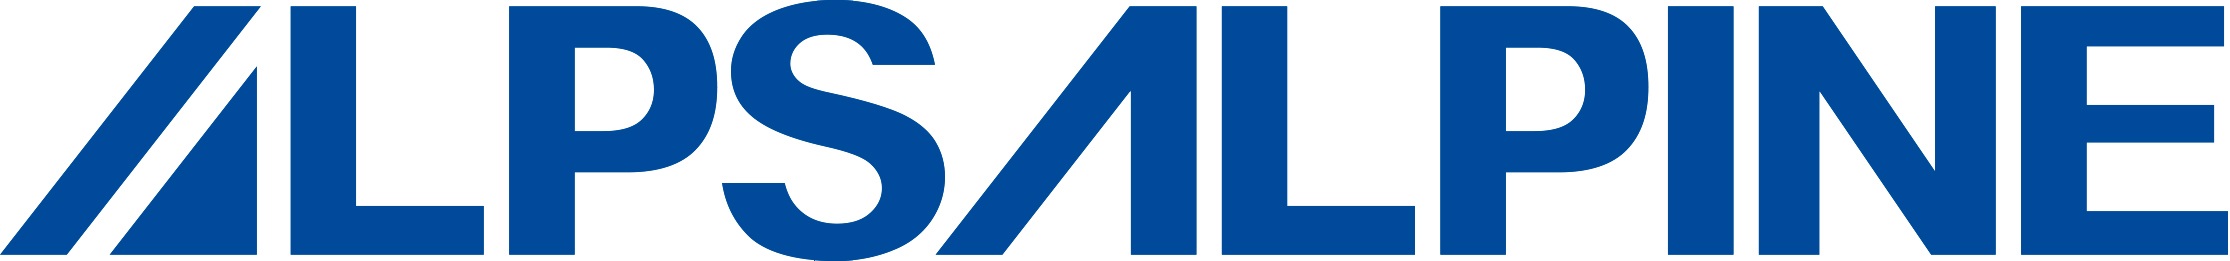 Alpine Európai Elektronikai Ipari Kft. - Állás, munka